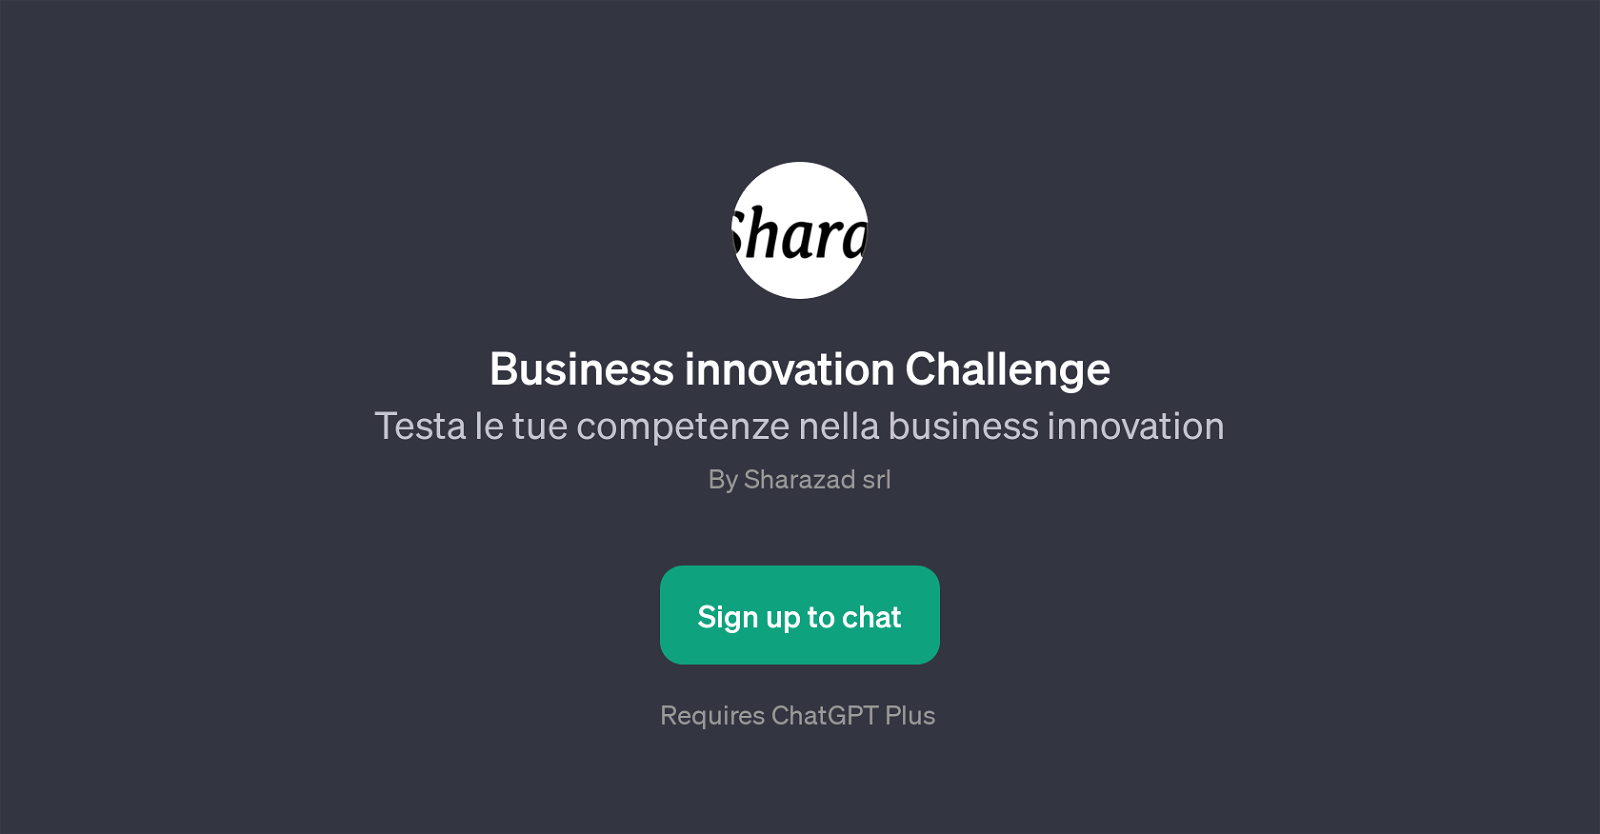 Business Innovation Challenge website